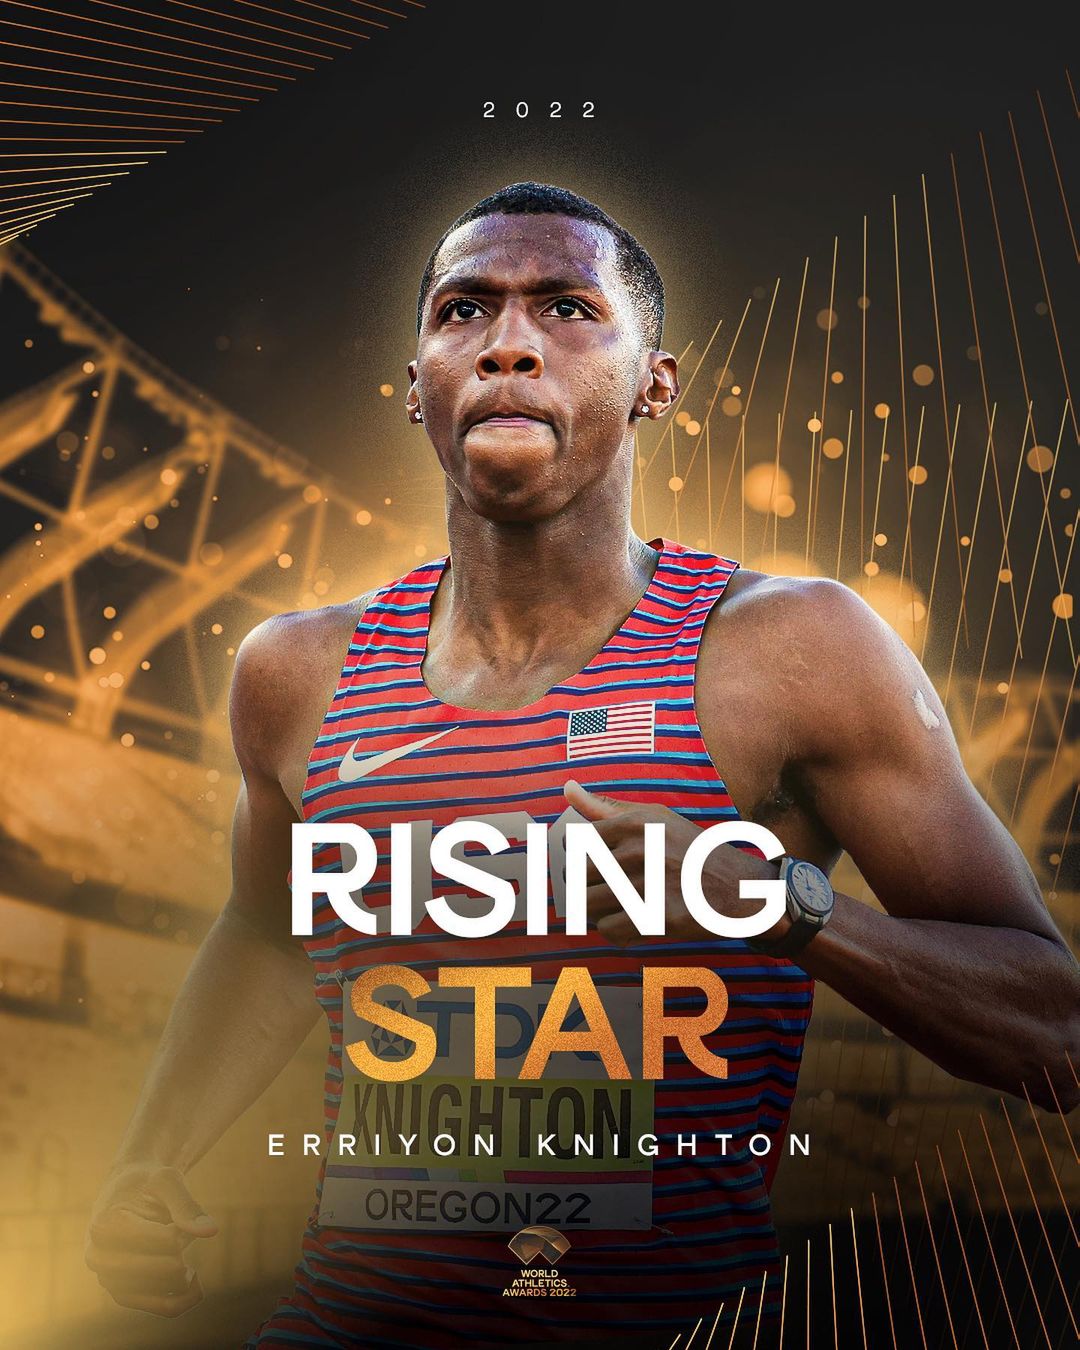 Adriana Vilagos and US sprinter Erriyon Knighton were named World Athletics Rising Stars of 2022